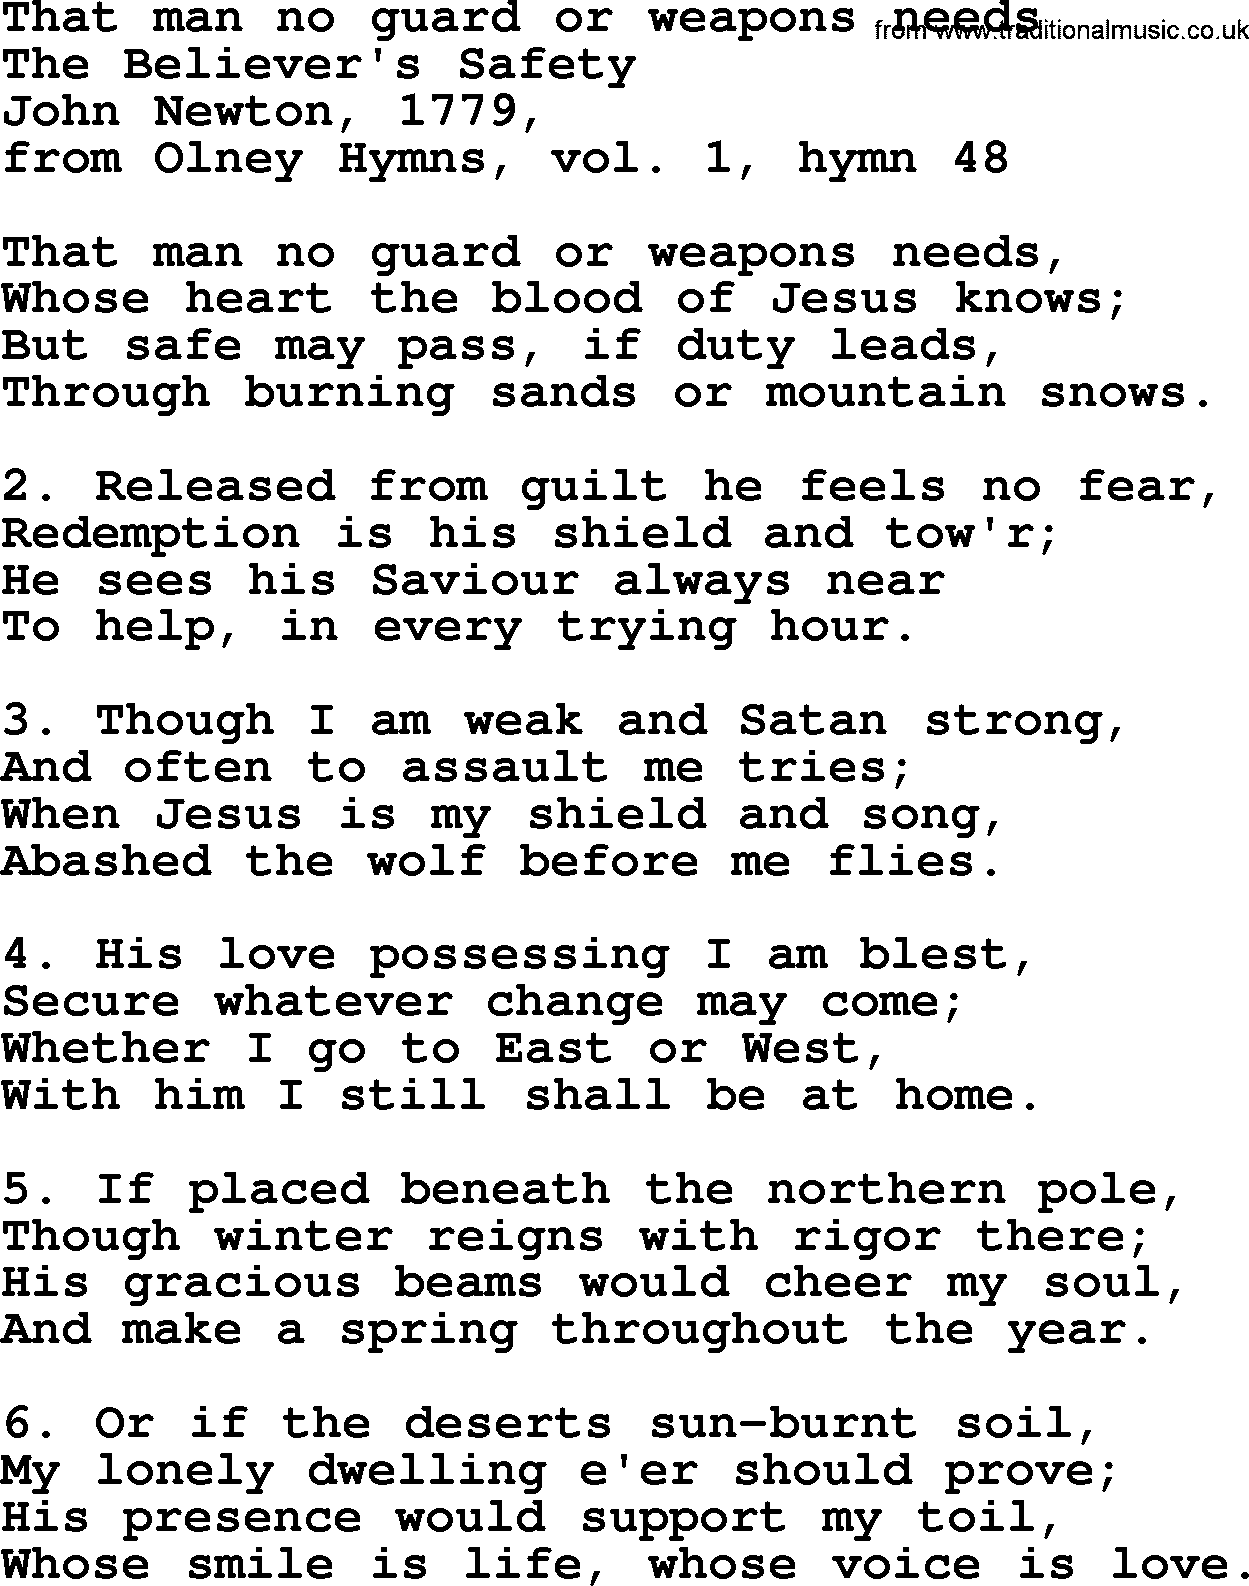 John Newton hymn: That Man No Guard Or Weapons Needs, lyrics